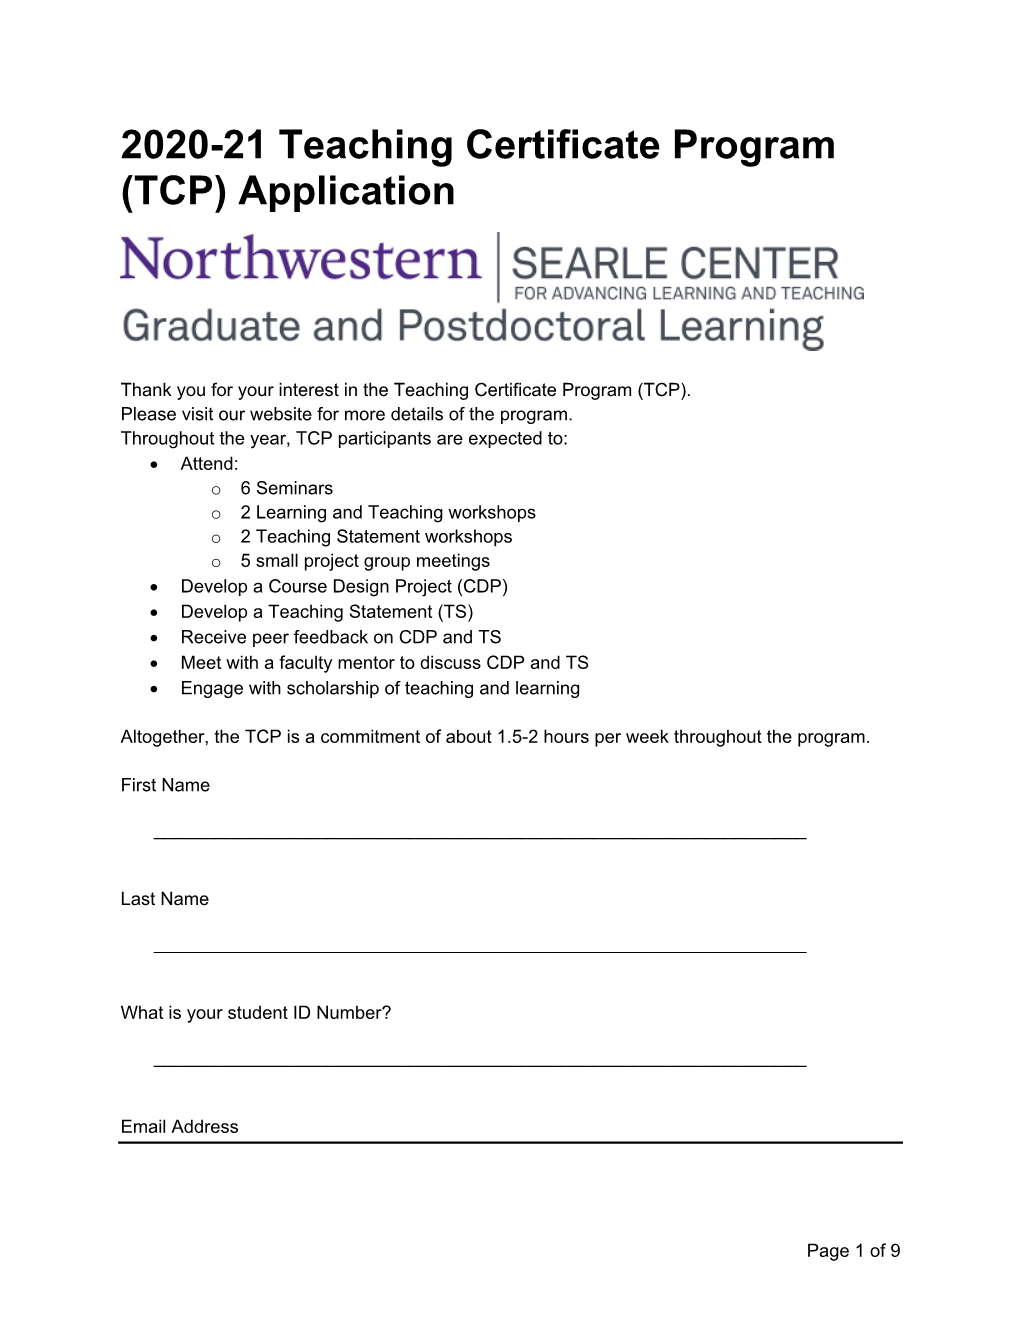 2020-21 Teaching Certificate Program (TCP) Application